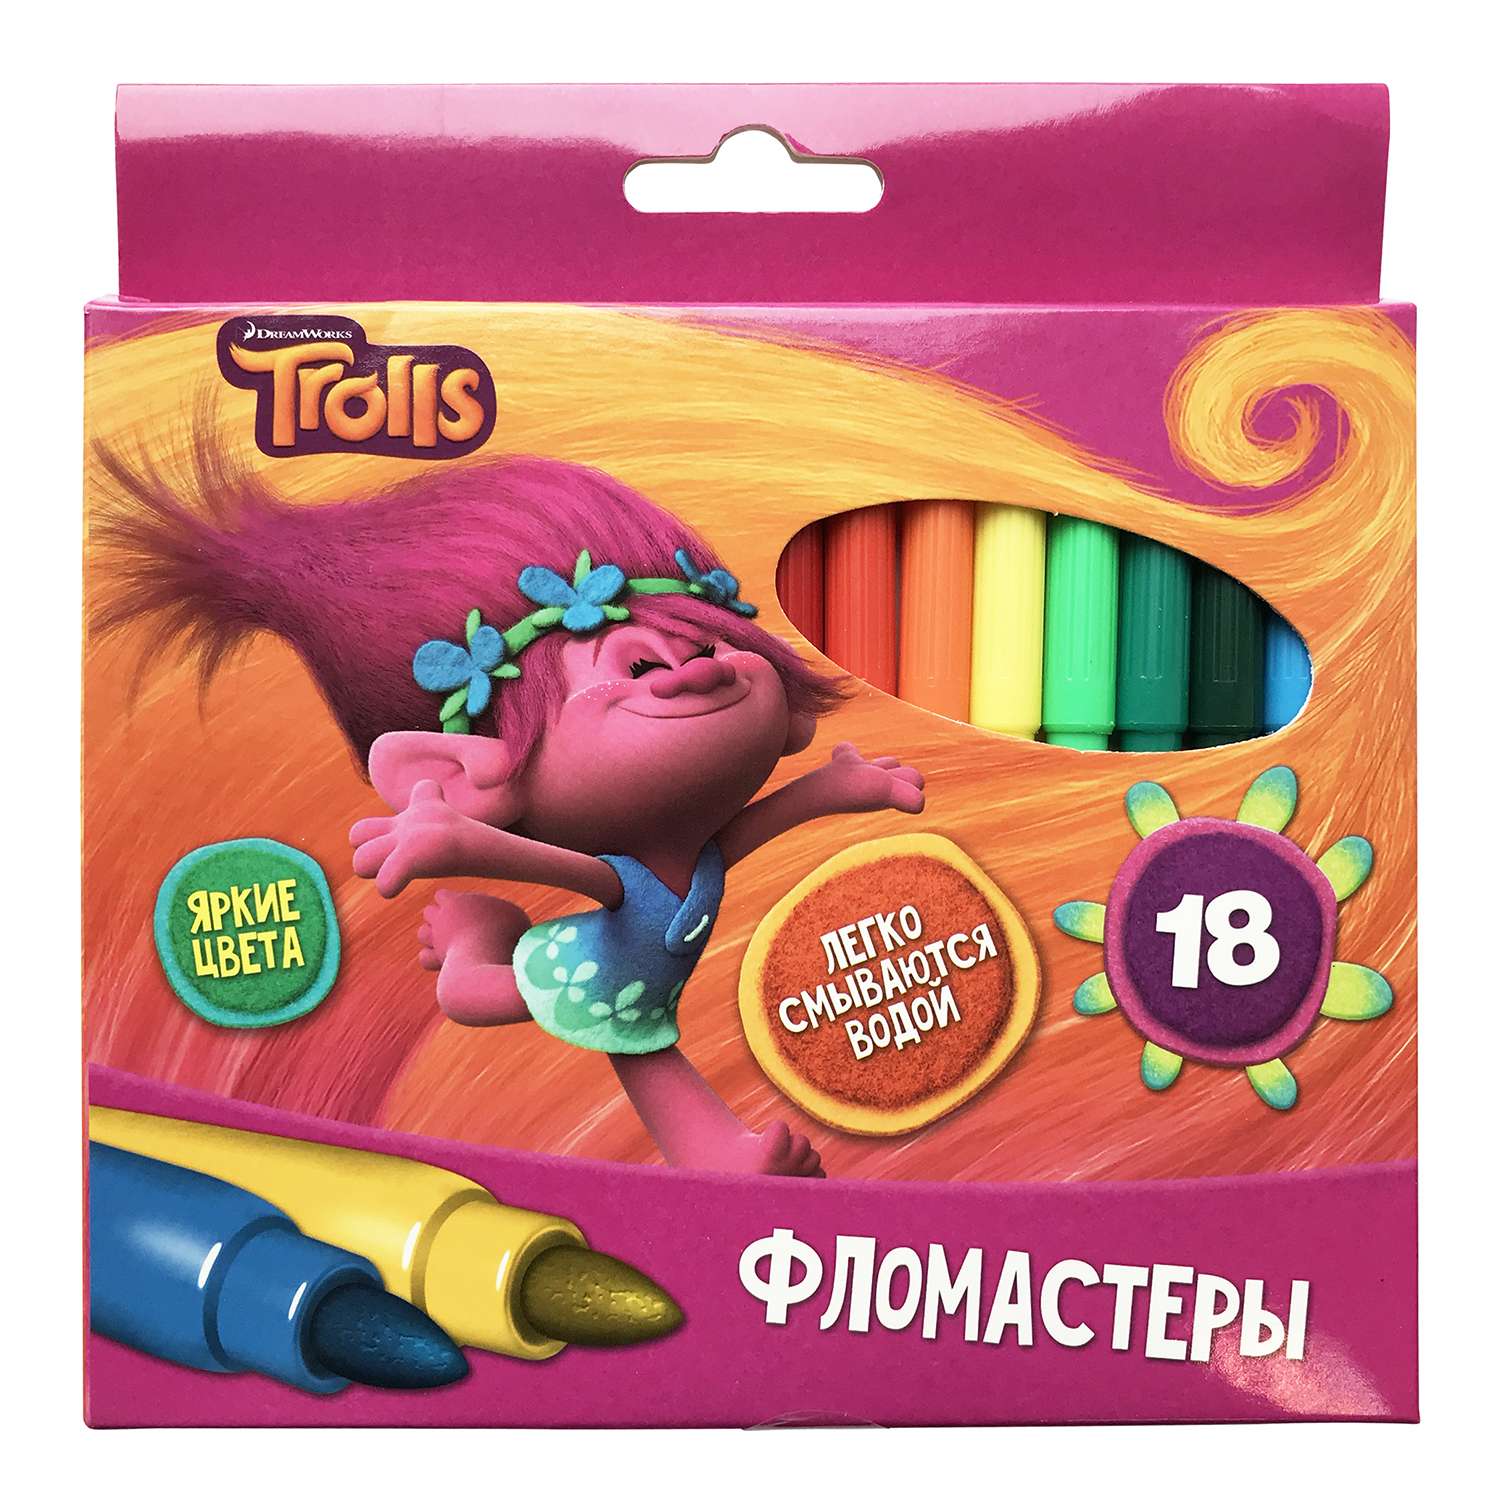 Фломастеры DreamWorks Trolls 18 цветов 1202202 - фото 1